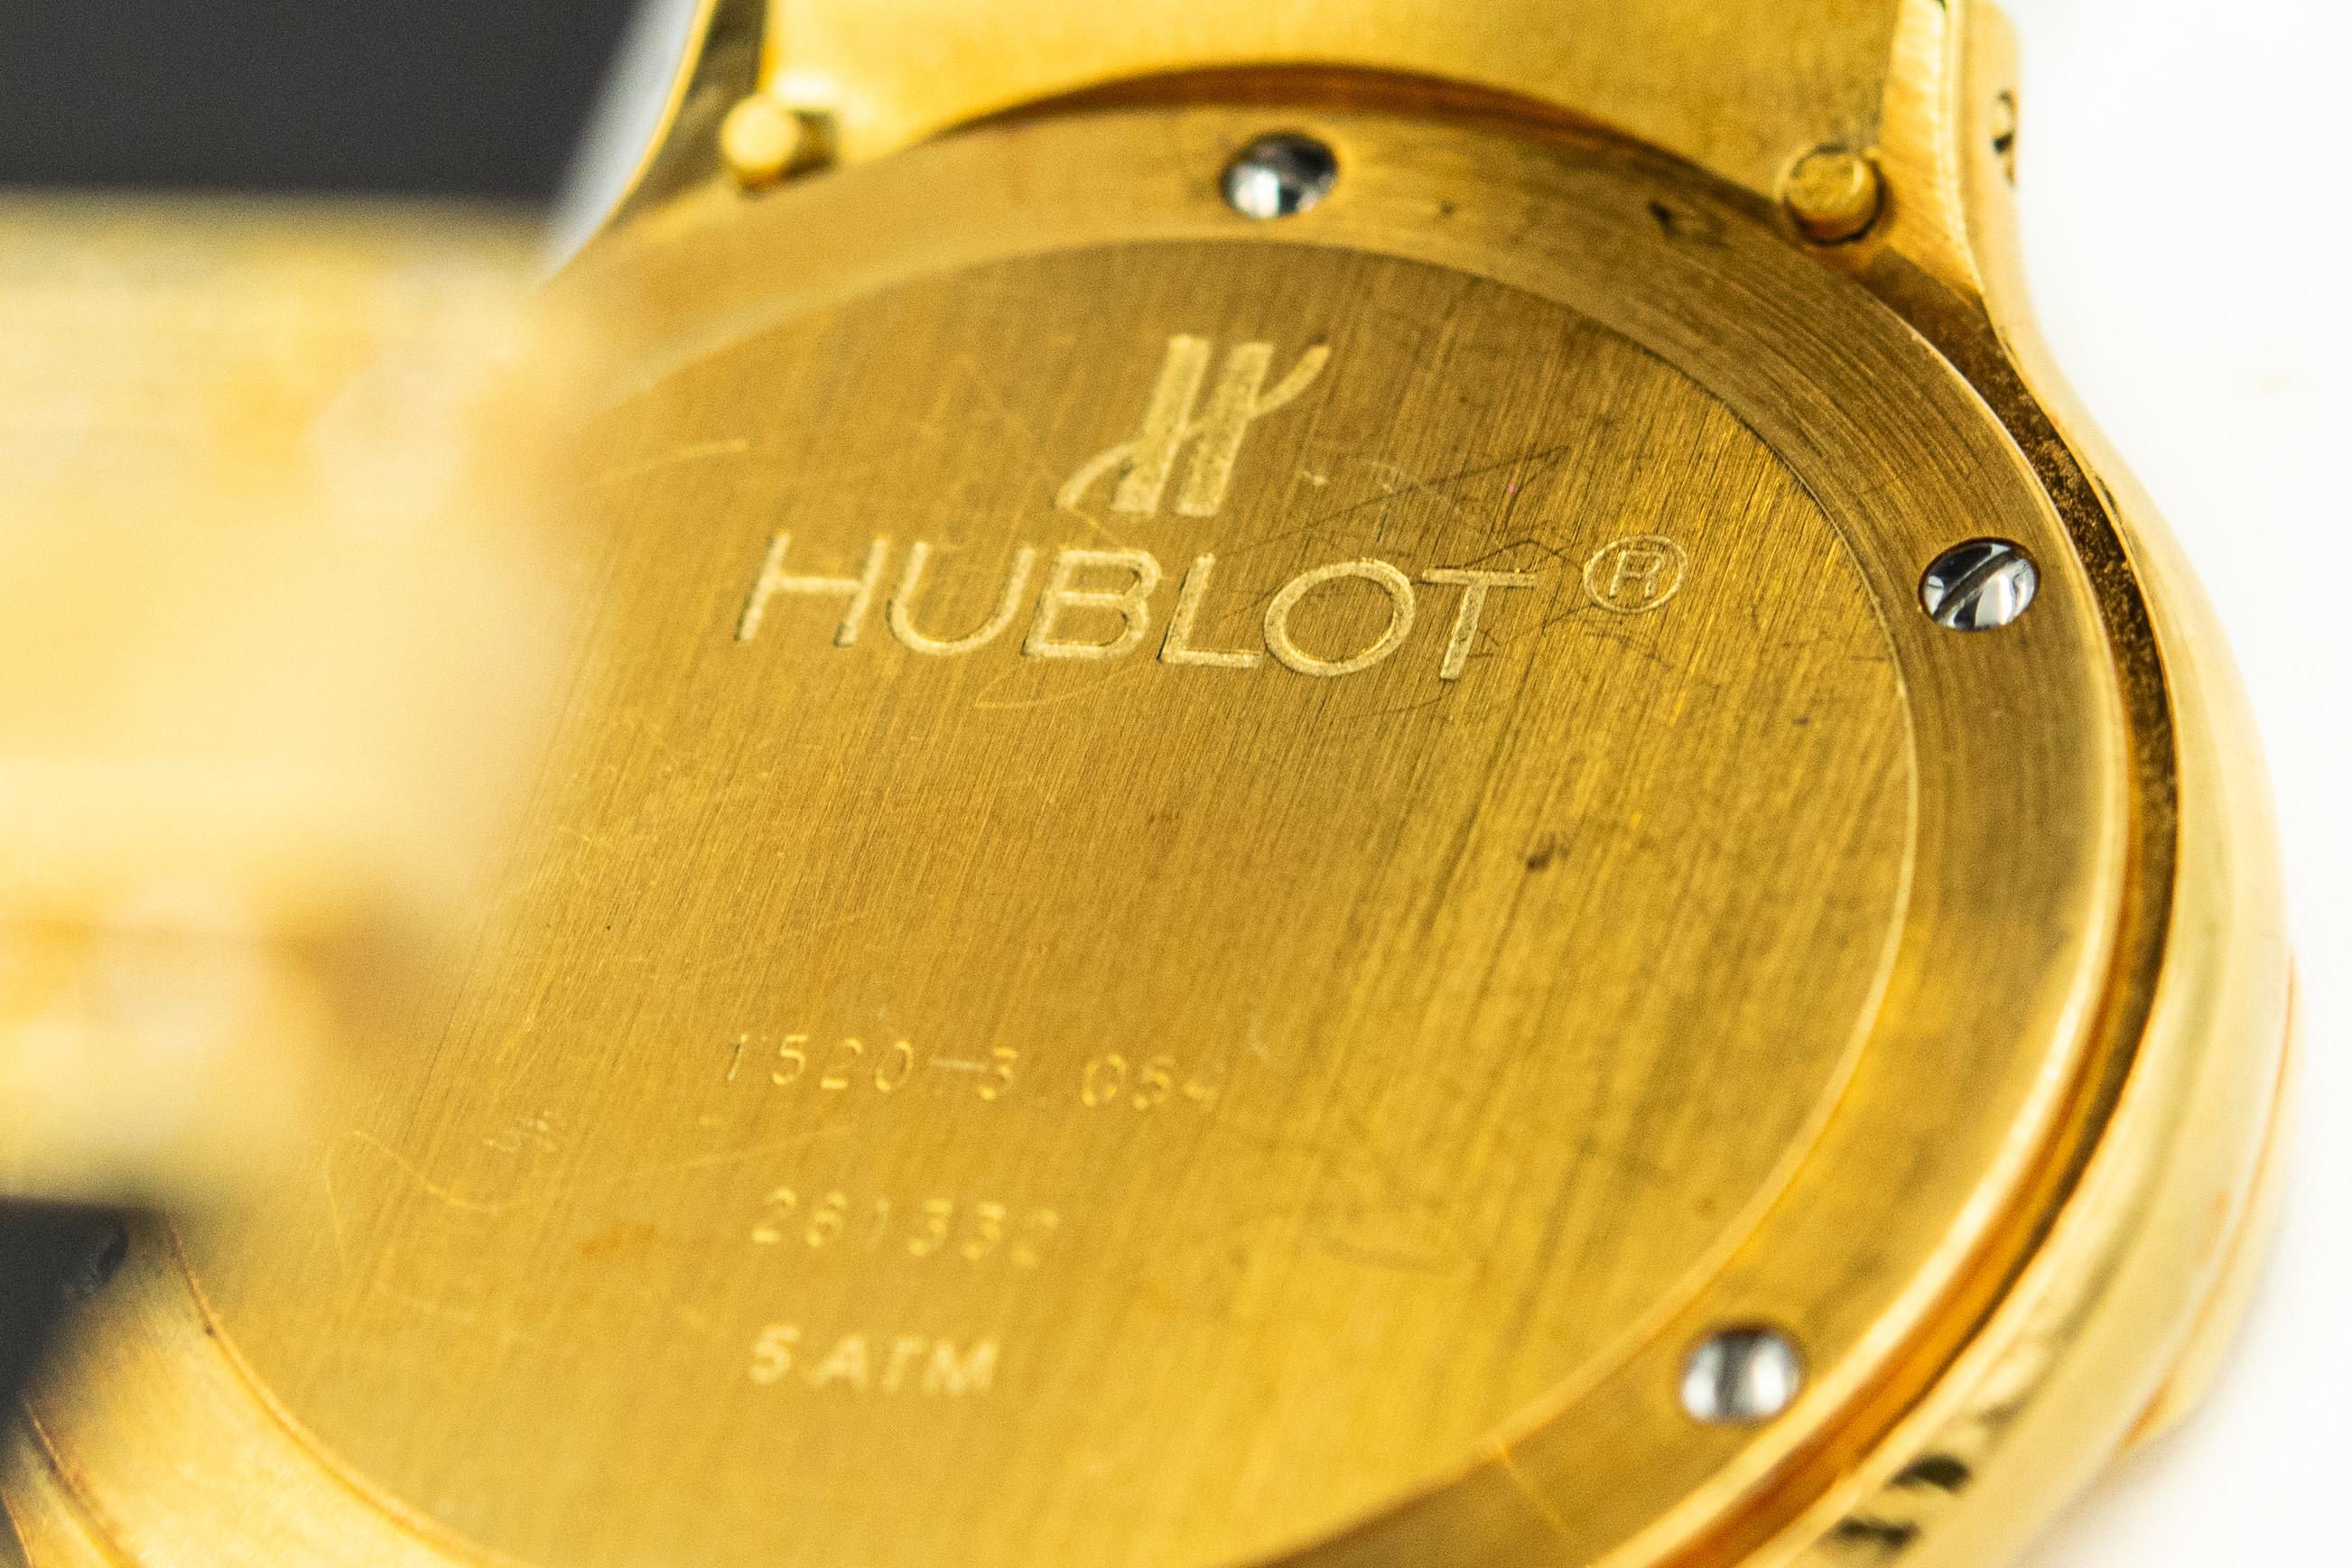 Hublot Men's MDM 18k Yellow Gold Watch Ref. 1520.3.054 2